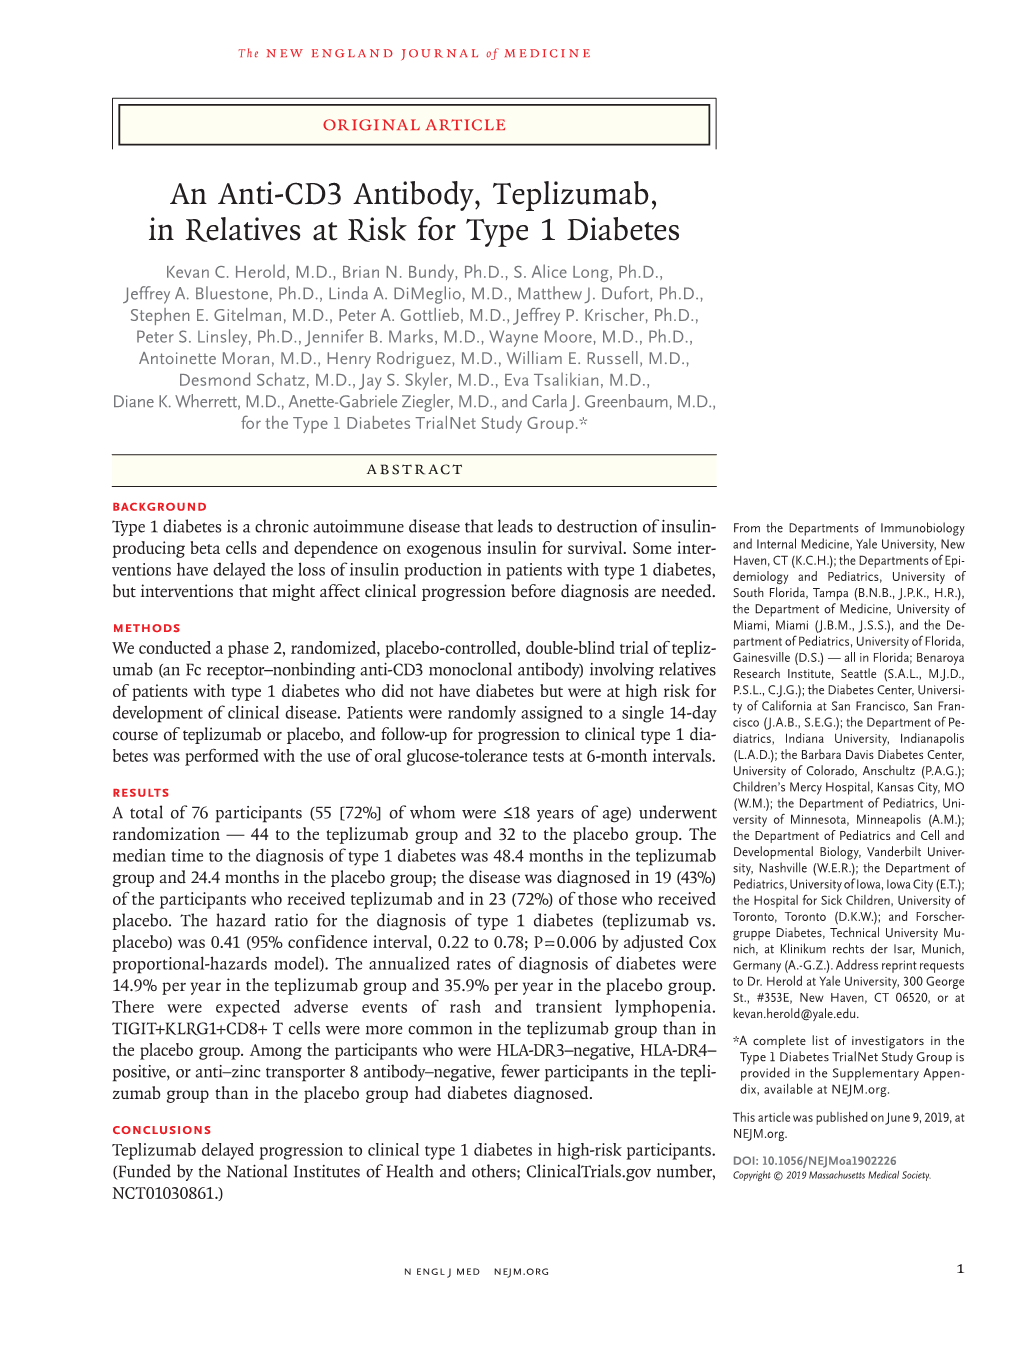 An Anti-CD3 Antibody, Teplizumab, in Relatives at Risk for Type 1 Diabetes Kevan C